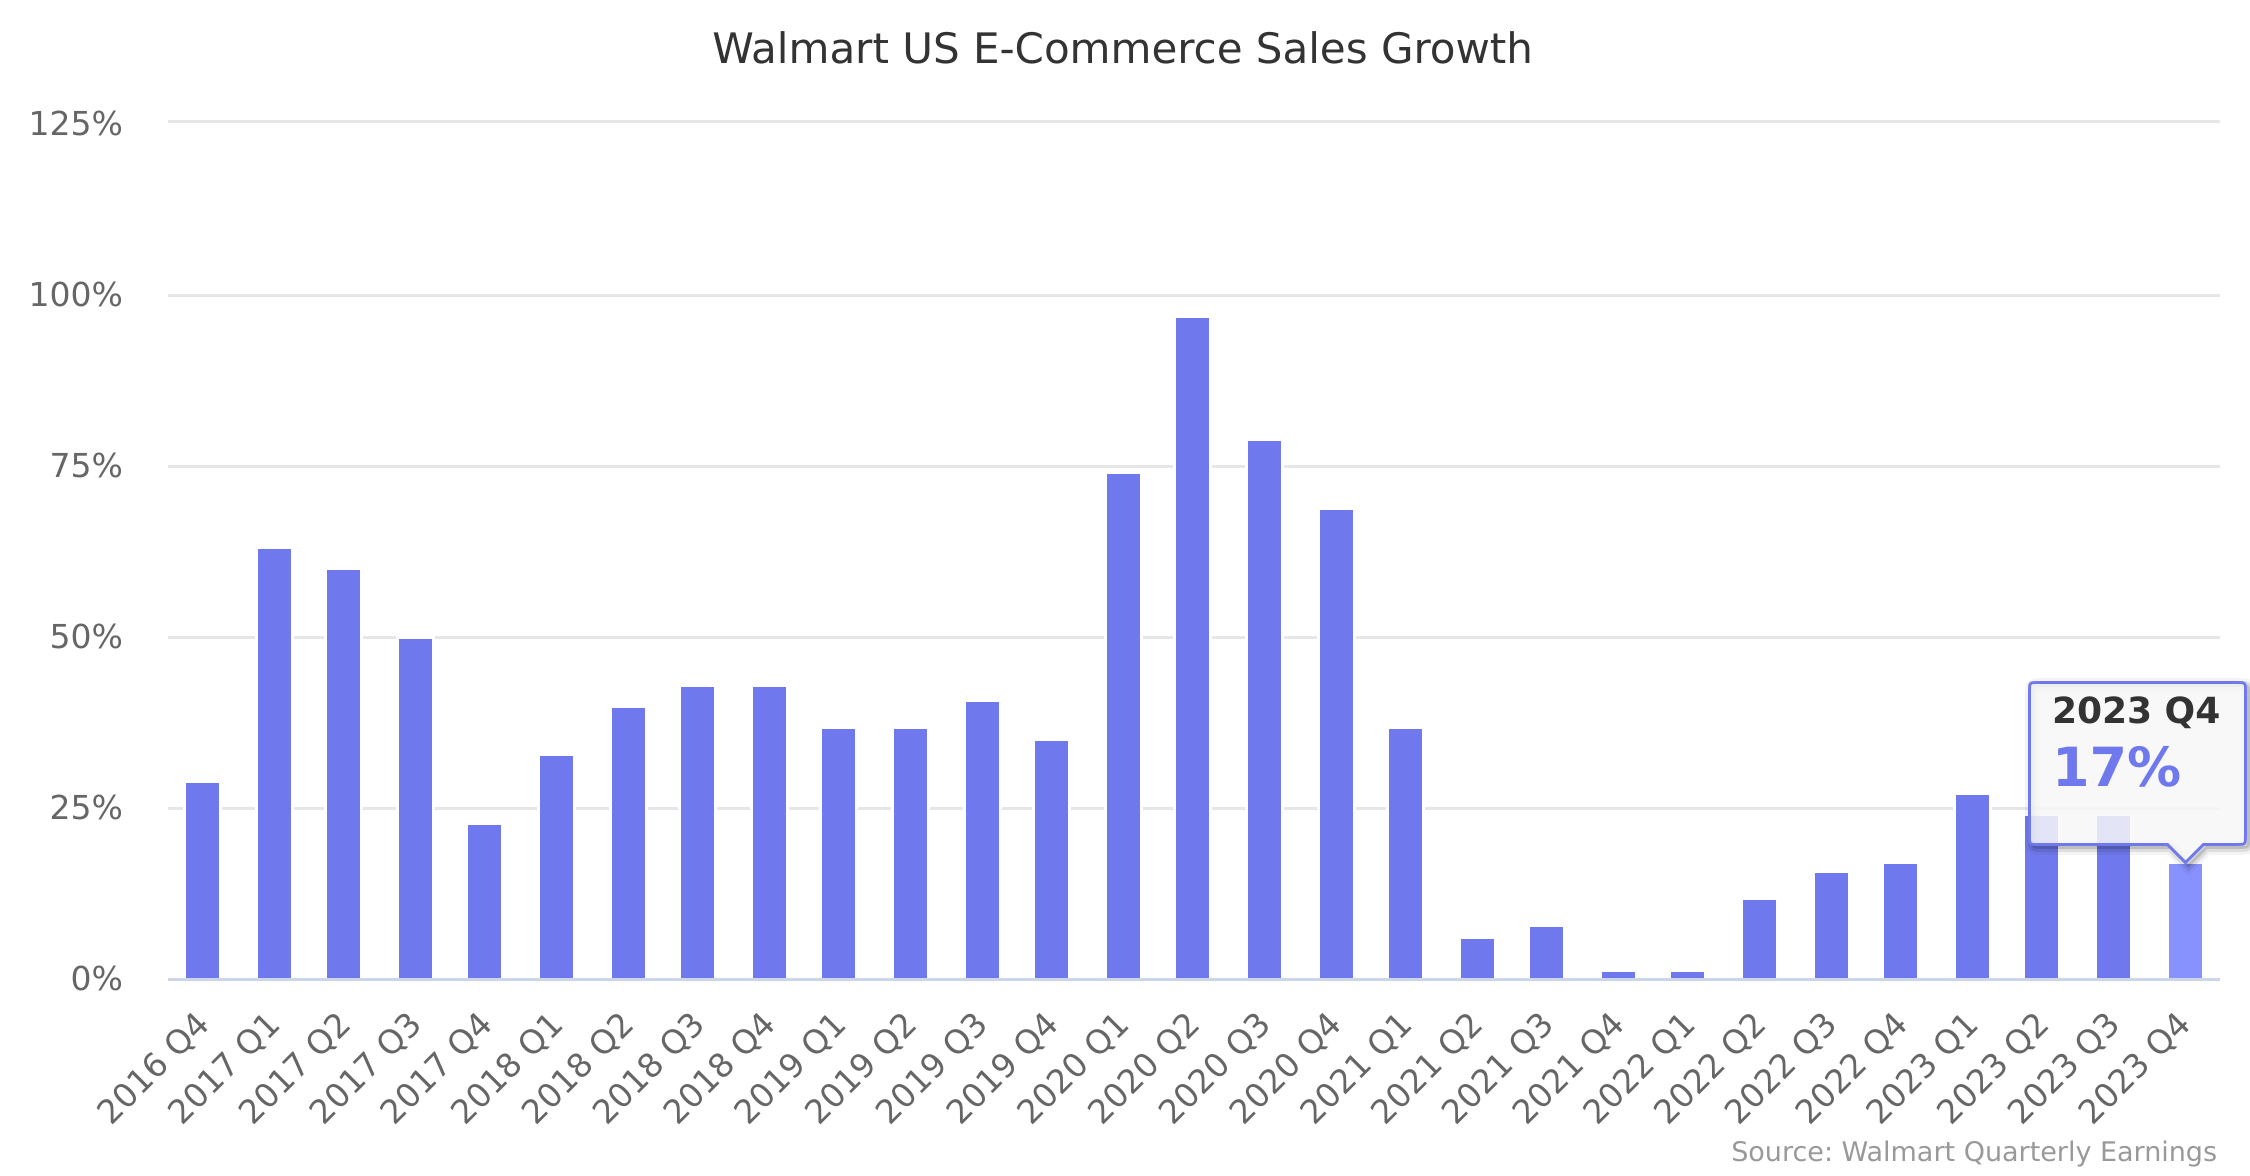 Walmart US E-Commerce Sales Growth